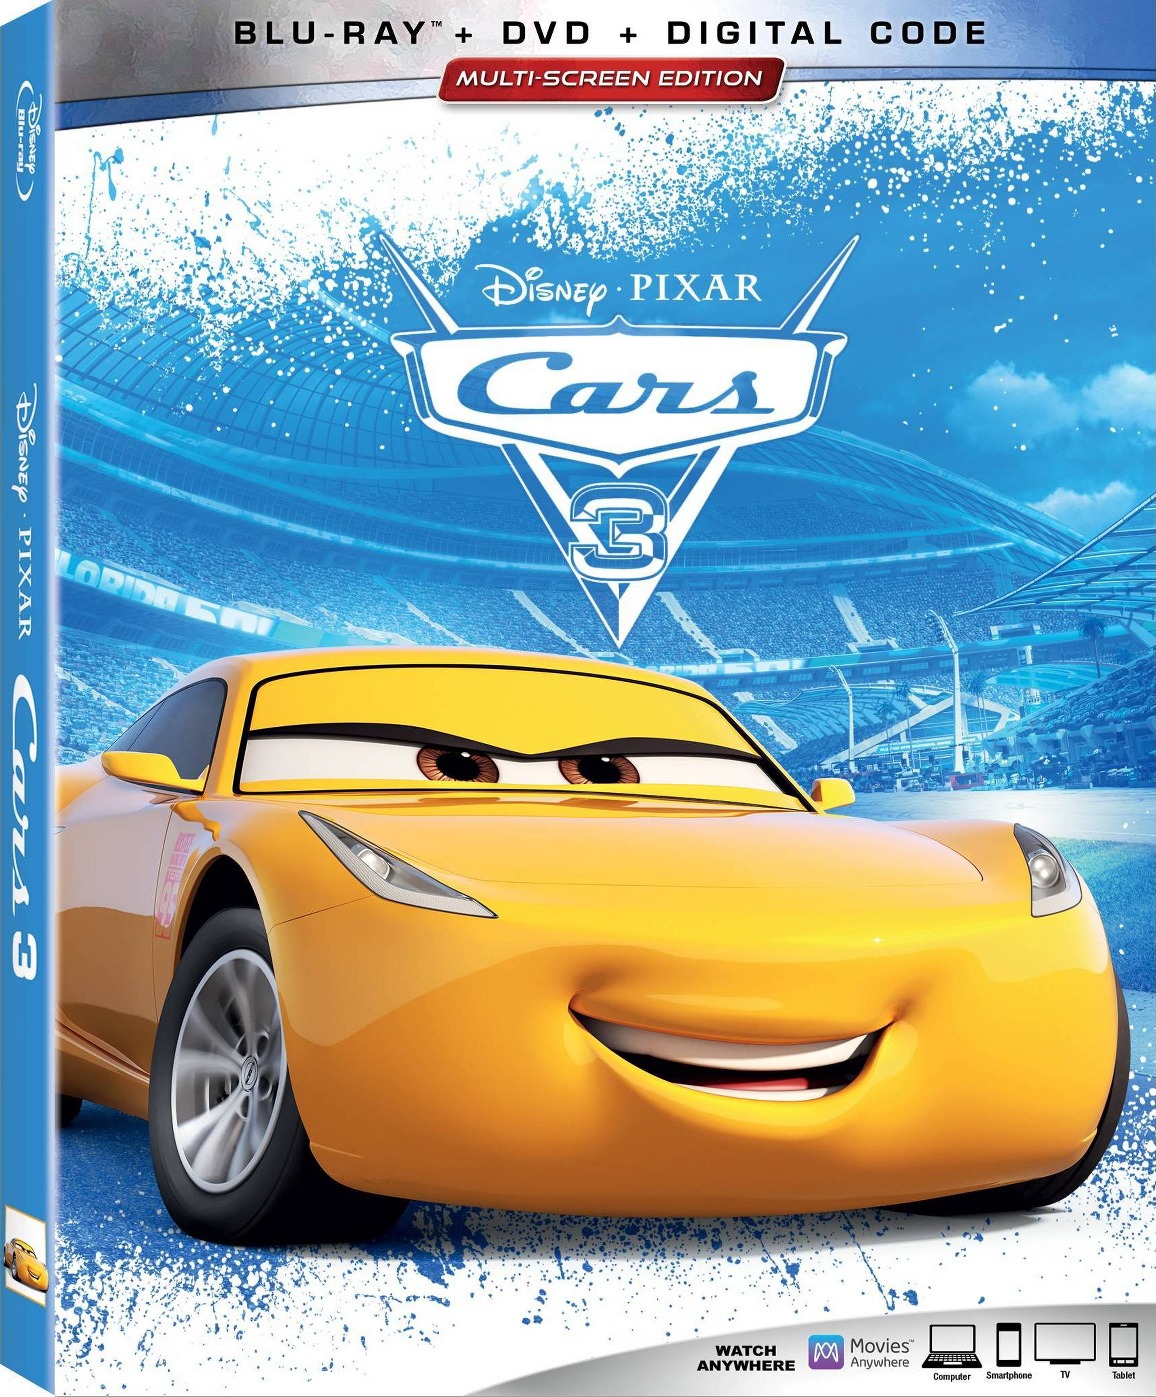 Catalog Pixar Titles On 4k Uhd Amp Multi Screen Edition Blu Rays Pixar Post Forum